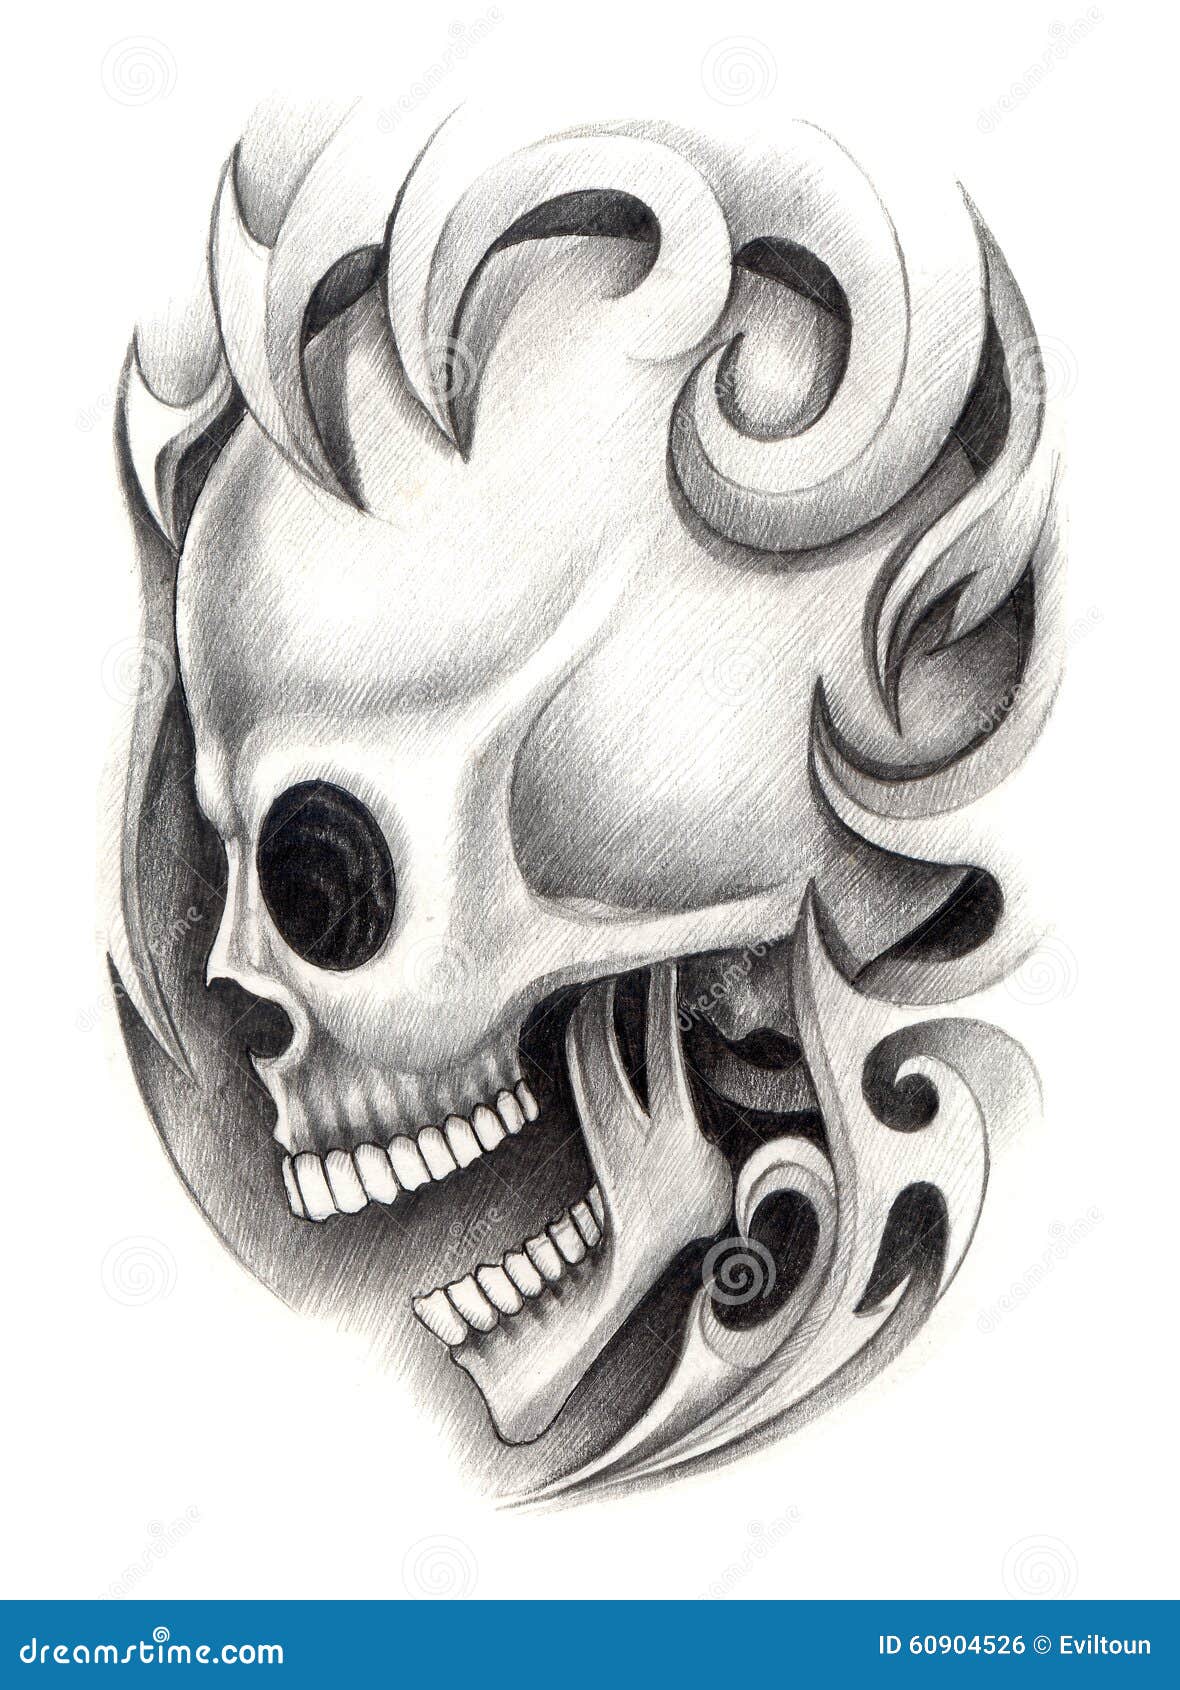 Art skull tattoo. stock illustration. Illustration of graphic - 60904526